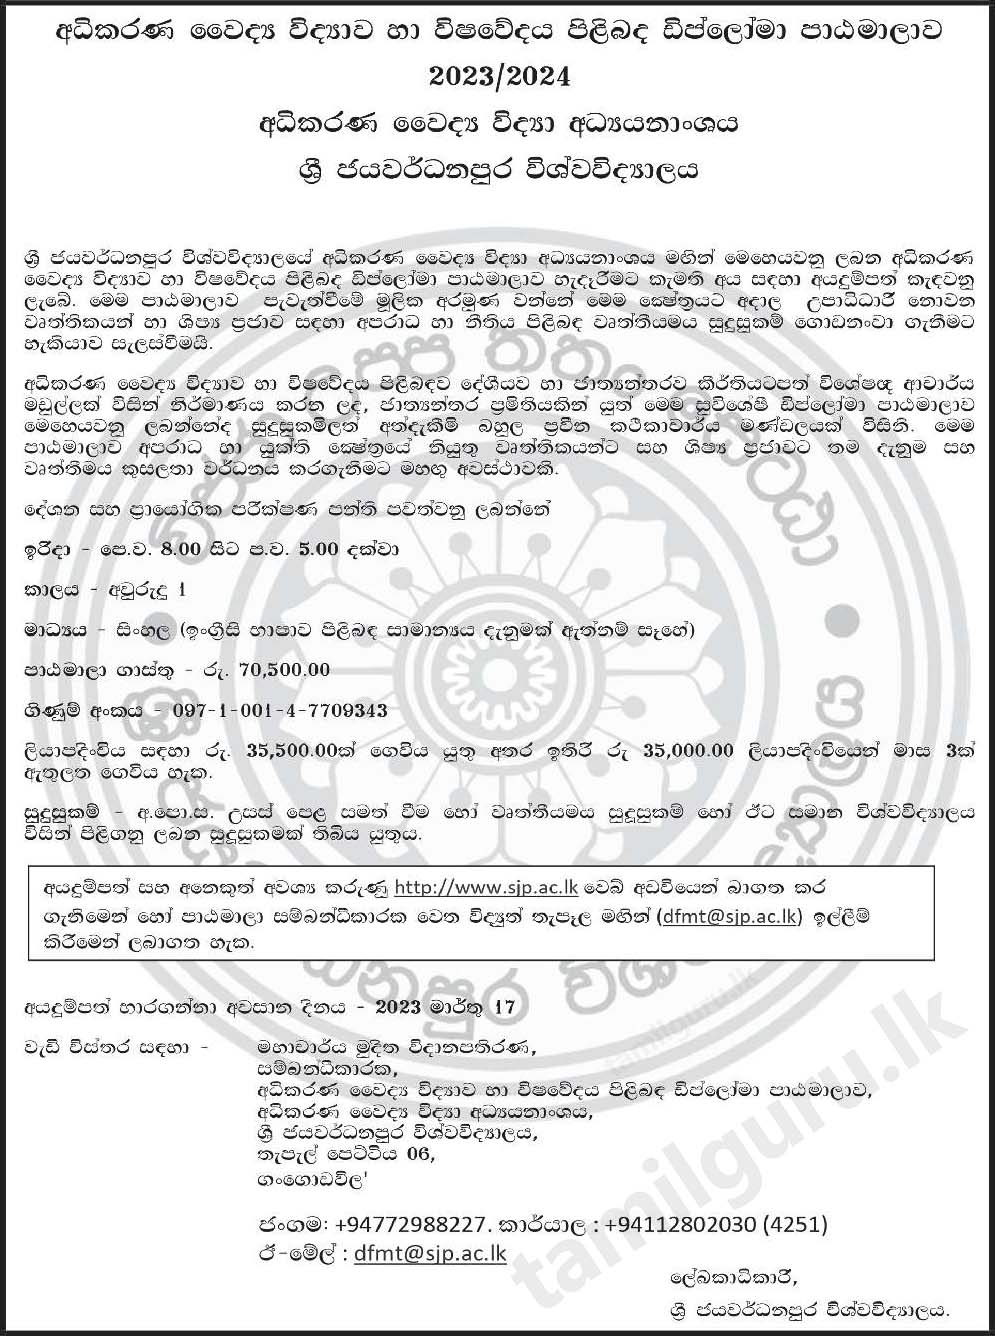 Calling Applications for Diploma in Forensic Medicine & Toxicology 2023 - University of Sri Jayewardenepura